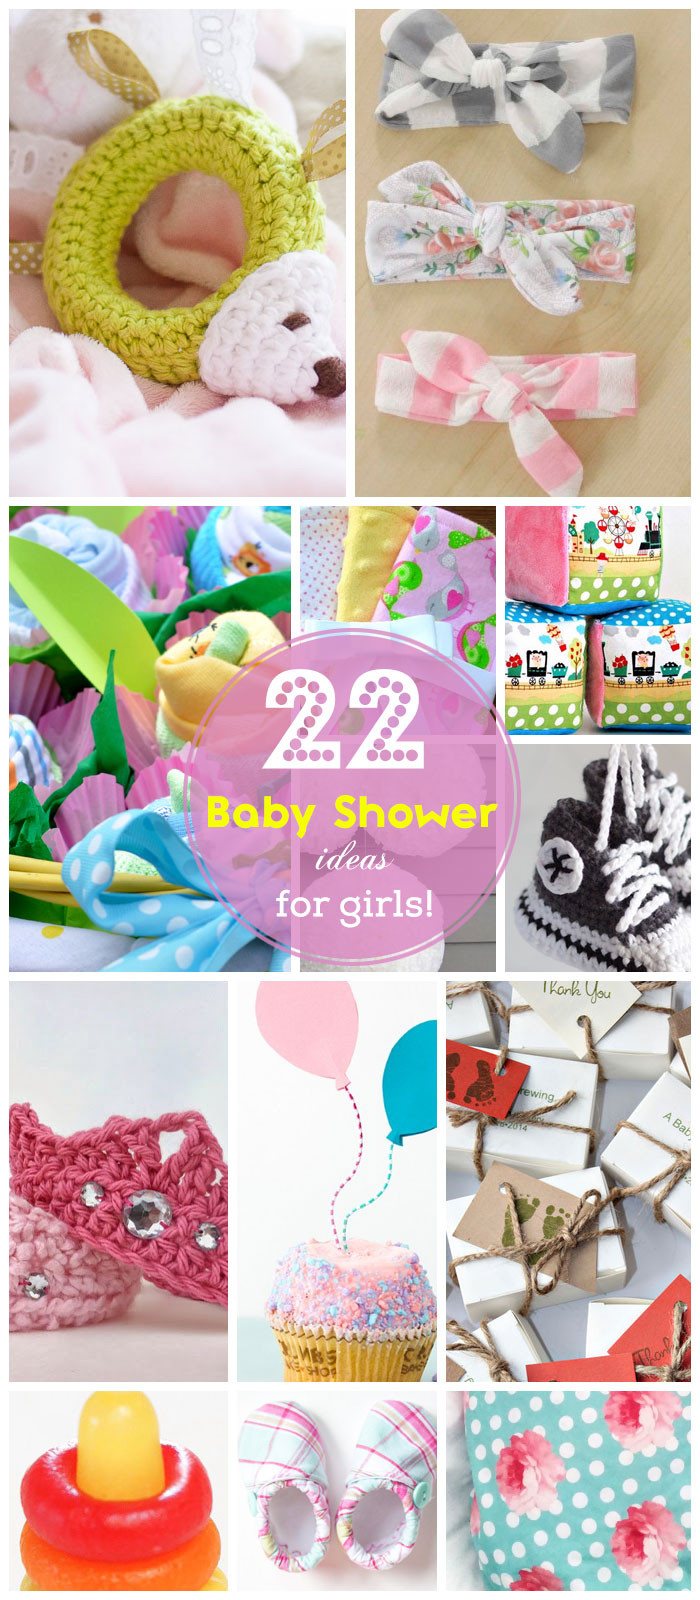 DIY Girl Baby Shower Ideas
 35 DIY Baby Shower Ideas for Girls